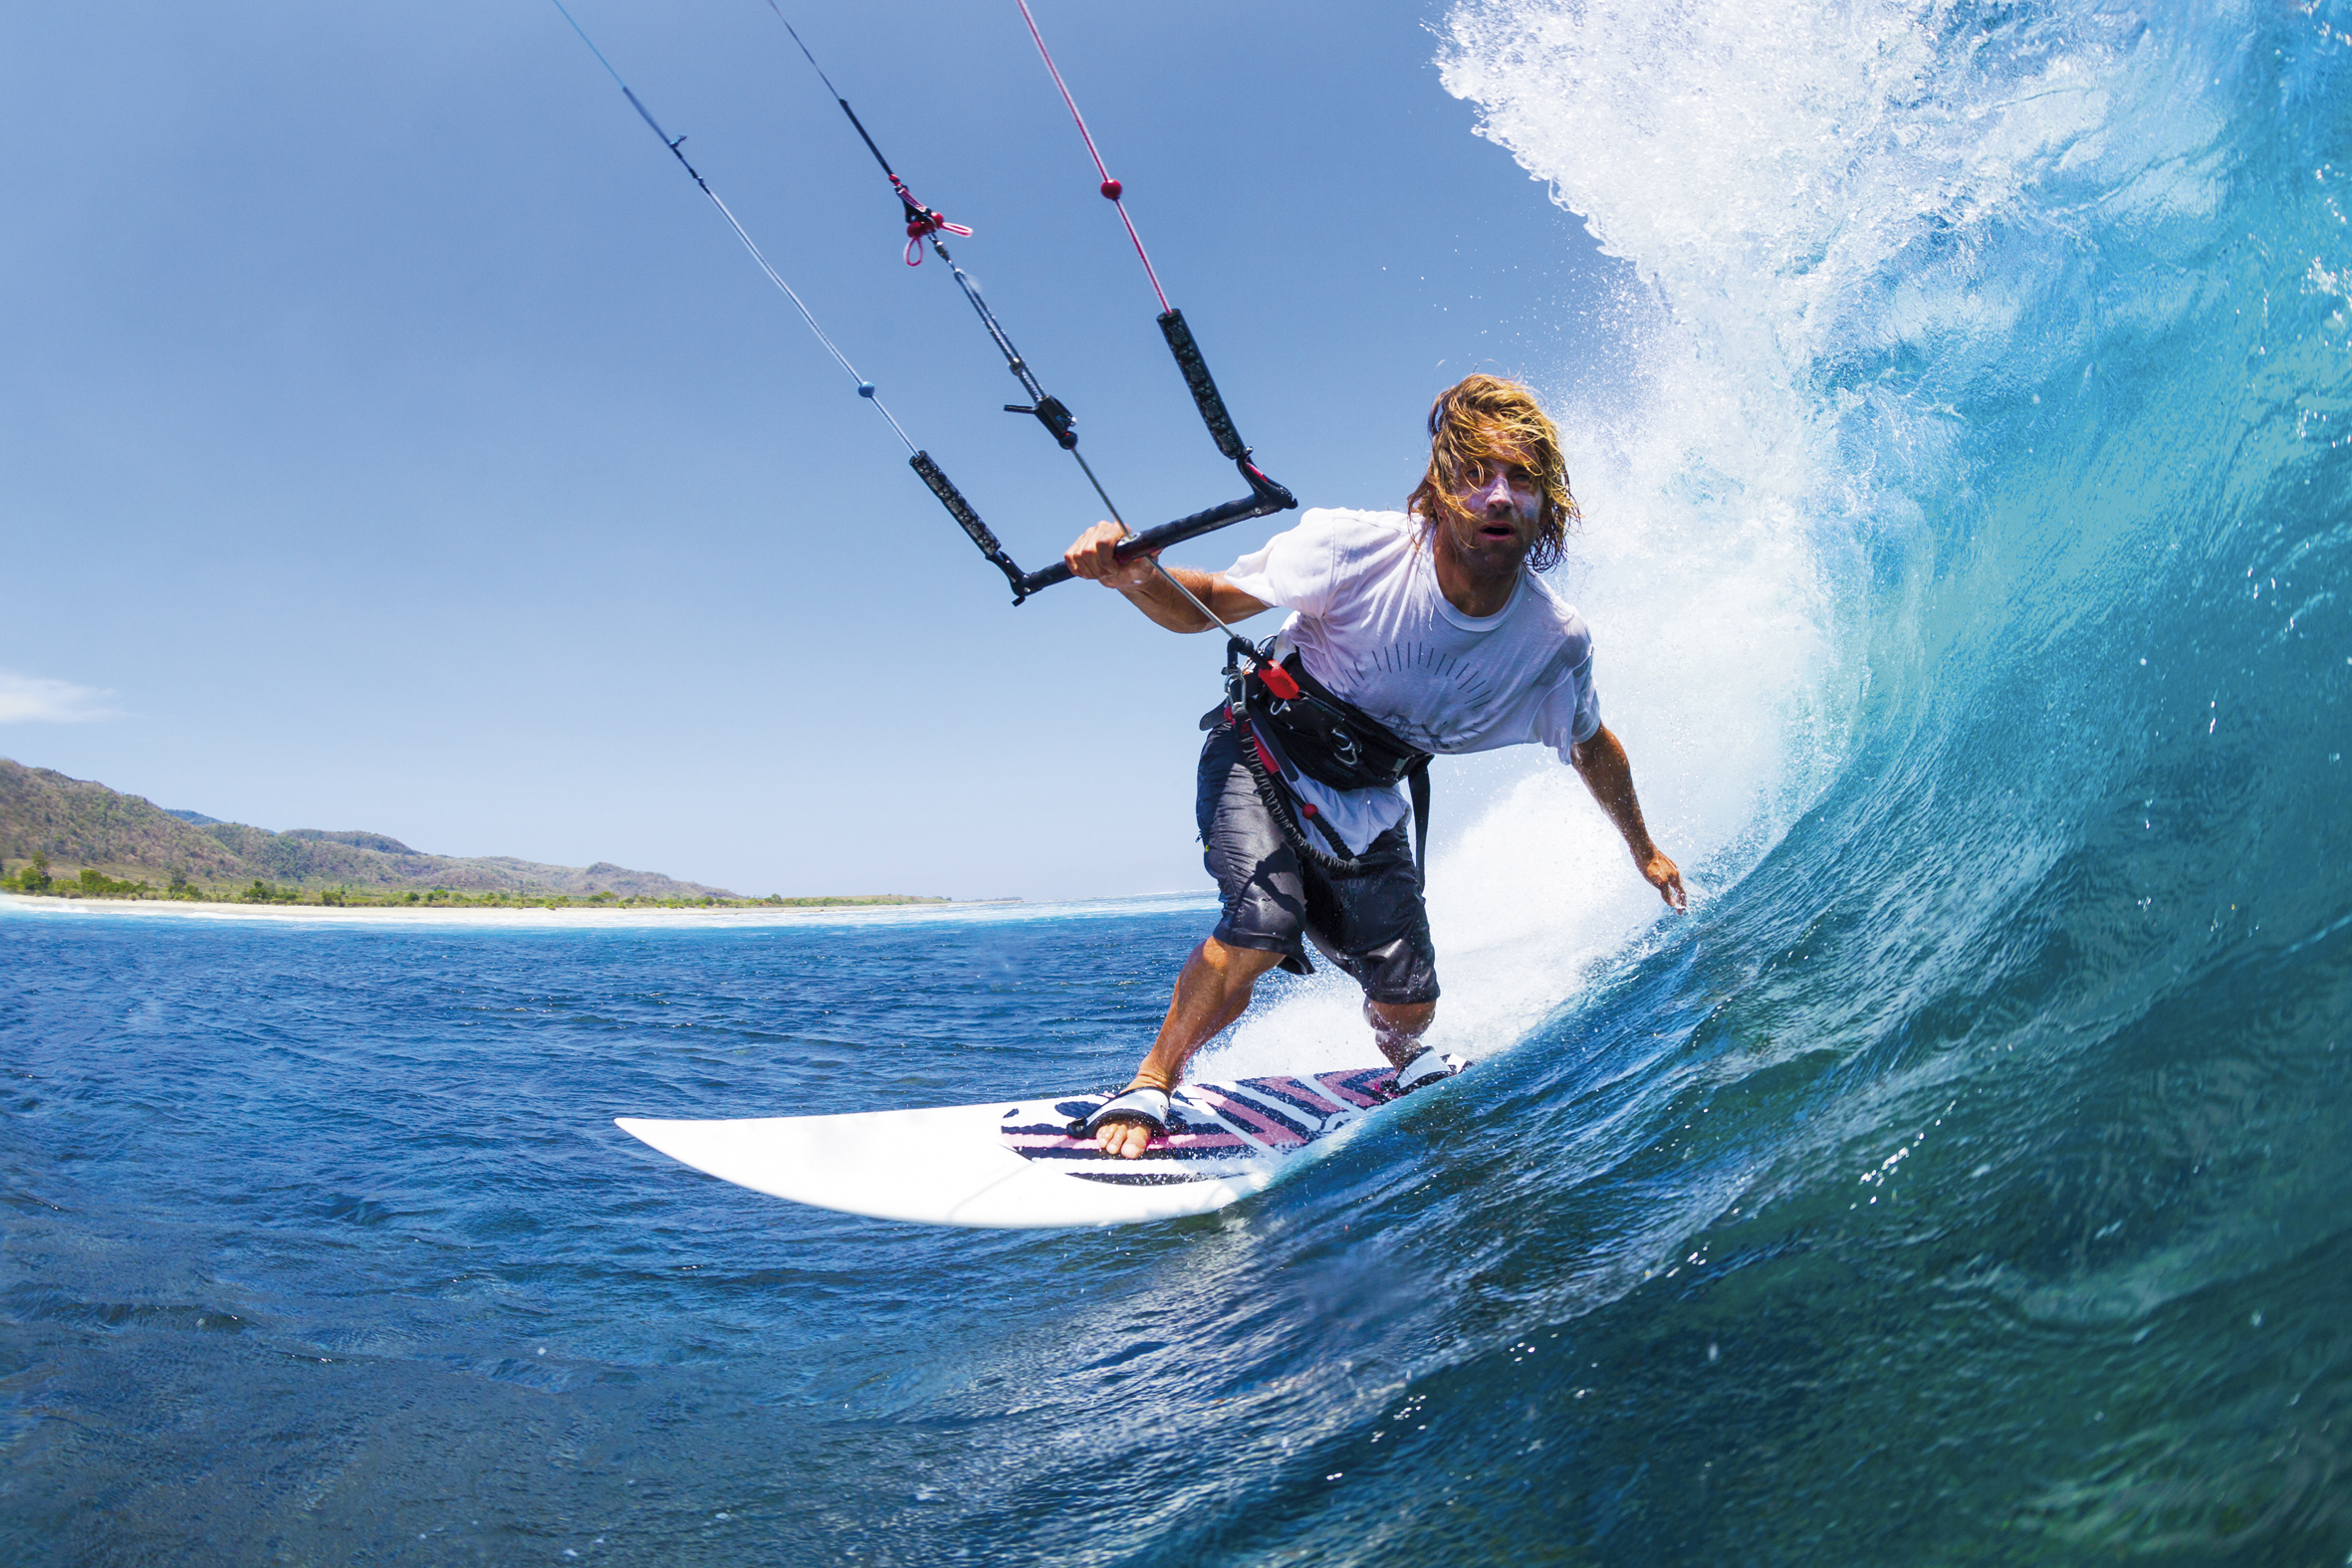 Extreme Sport, Kite Surfer Riding Wave getting Barreled